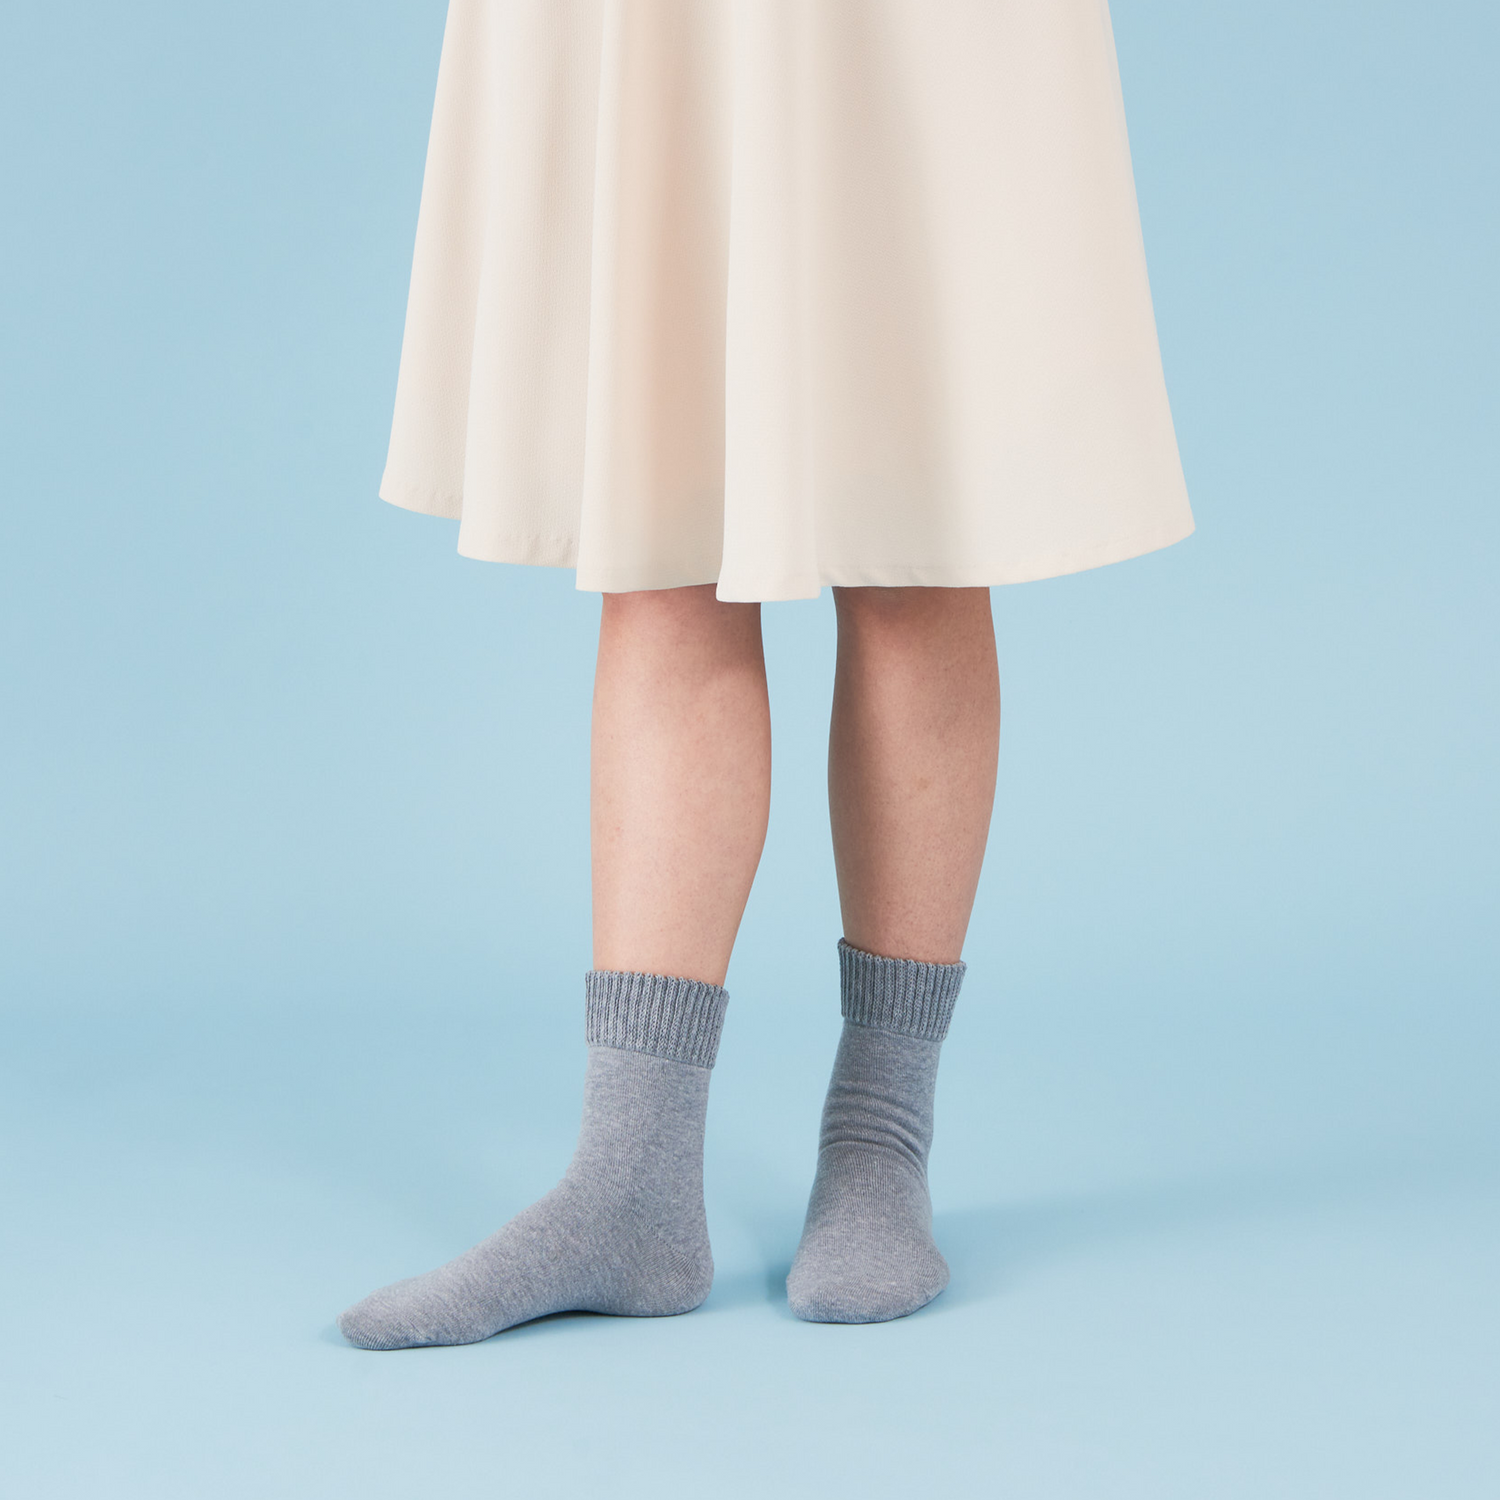 The original heel-smoothing socks – double-layered wool blend type – 710